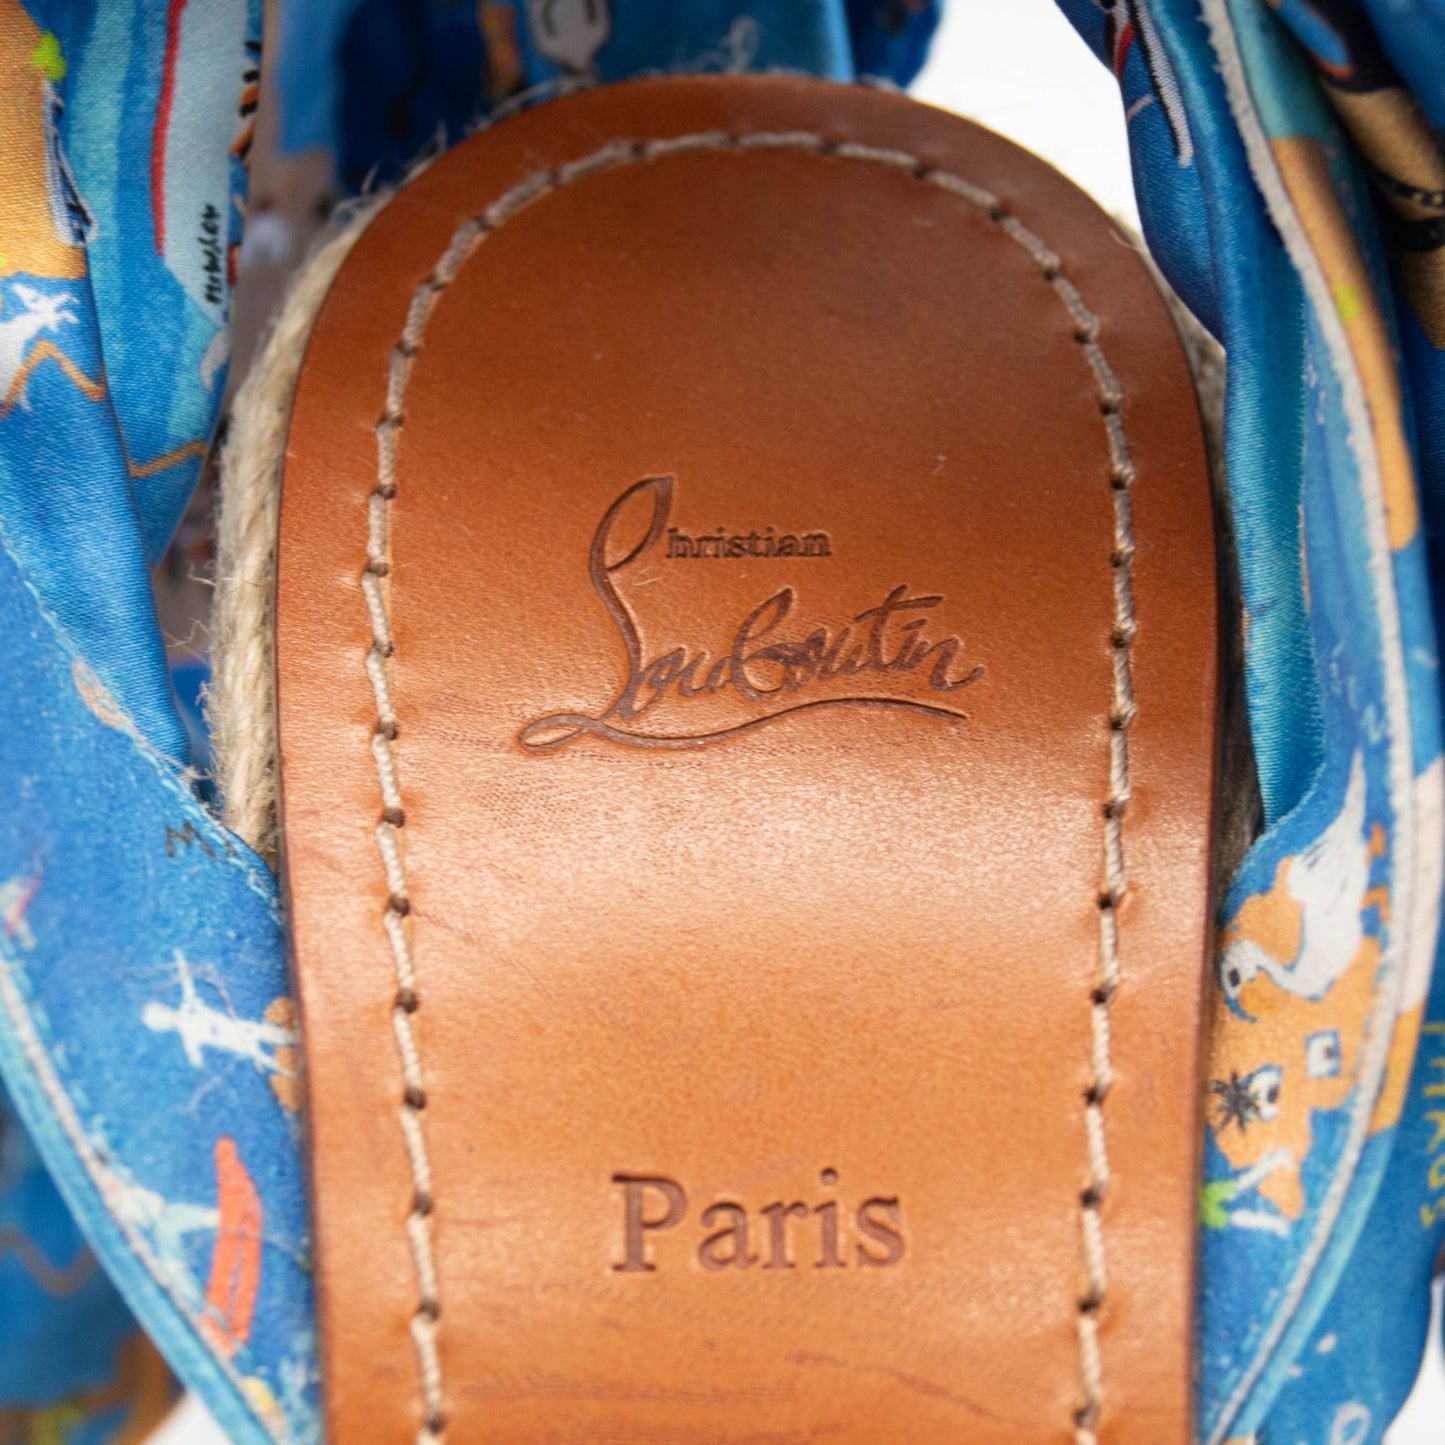 NEW $775 Christian Louboutin EU 40 MONICA DU DESERT Tie Platform Wedge Heel Sandal Shoes